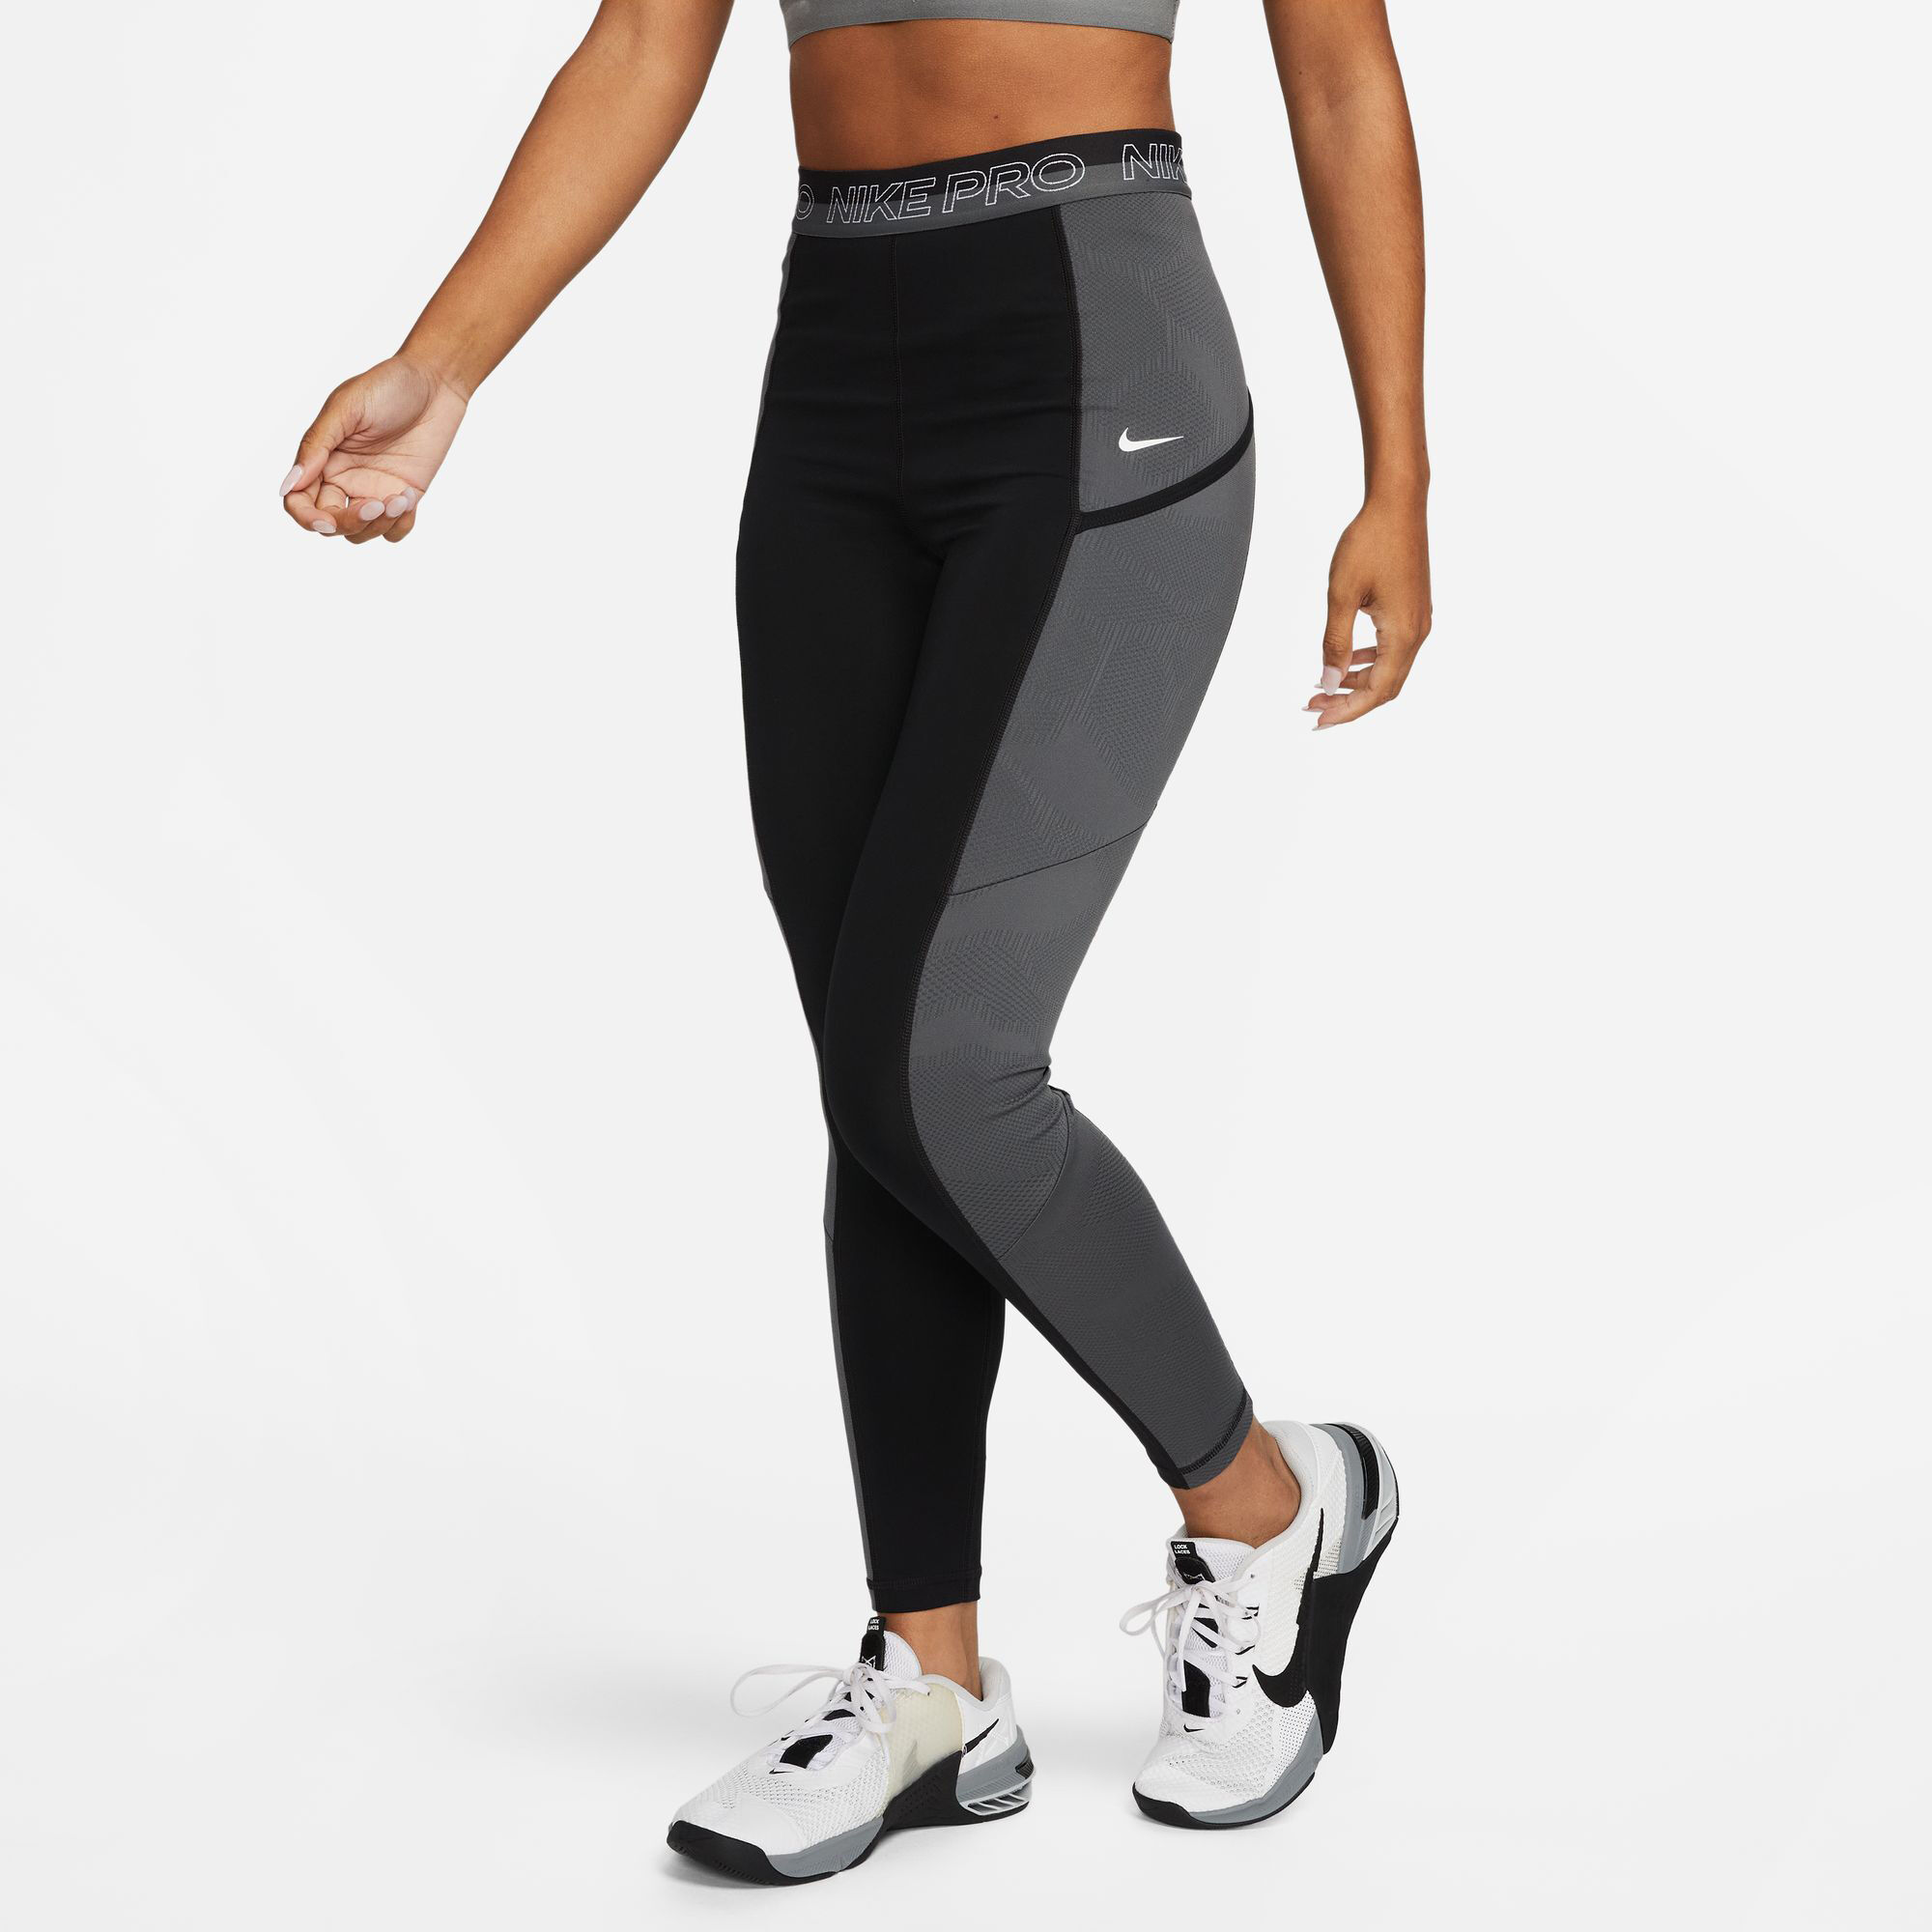 Buy Nike Dri-Fit Performance Heritage Tight Women Black, Grey online